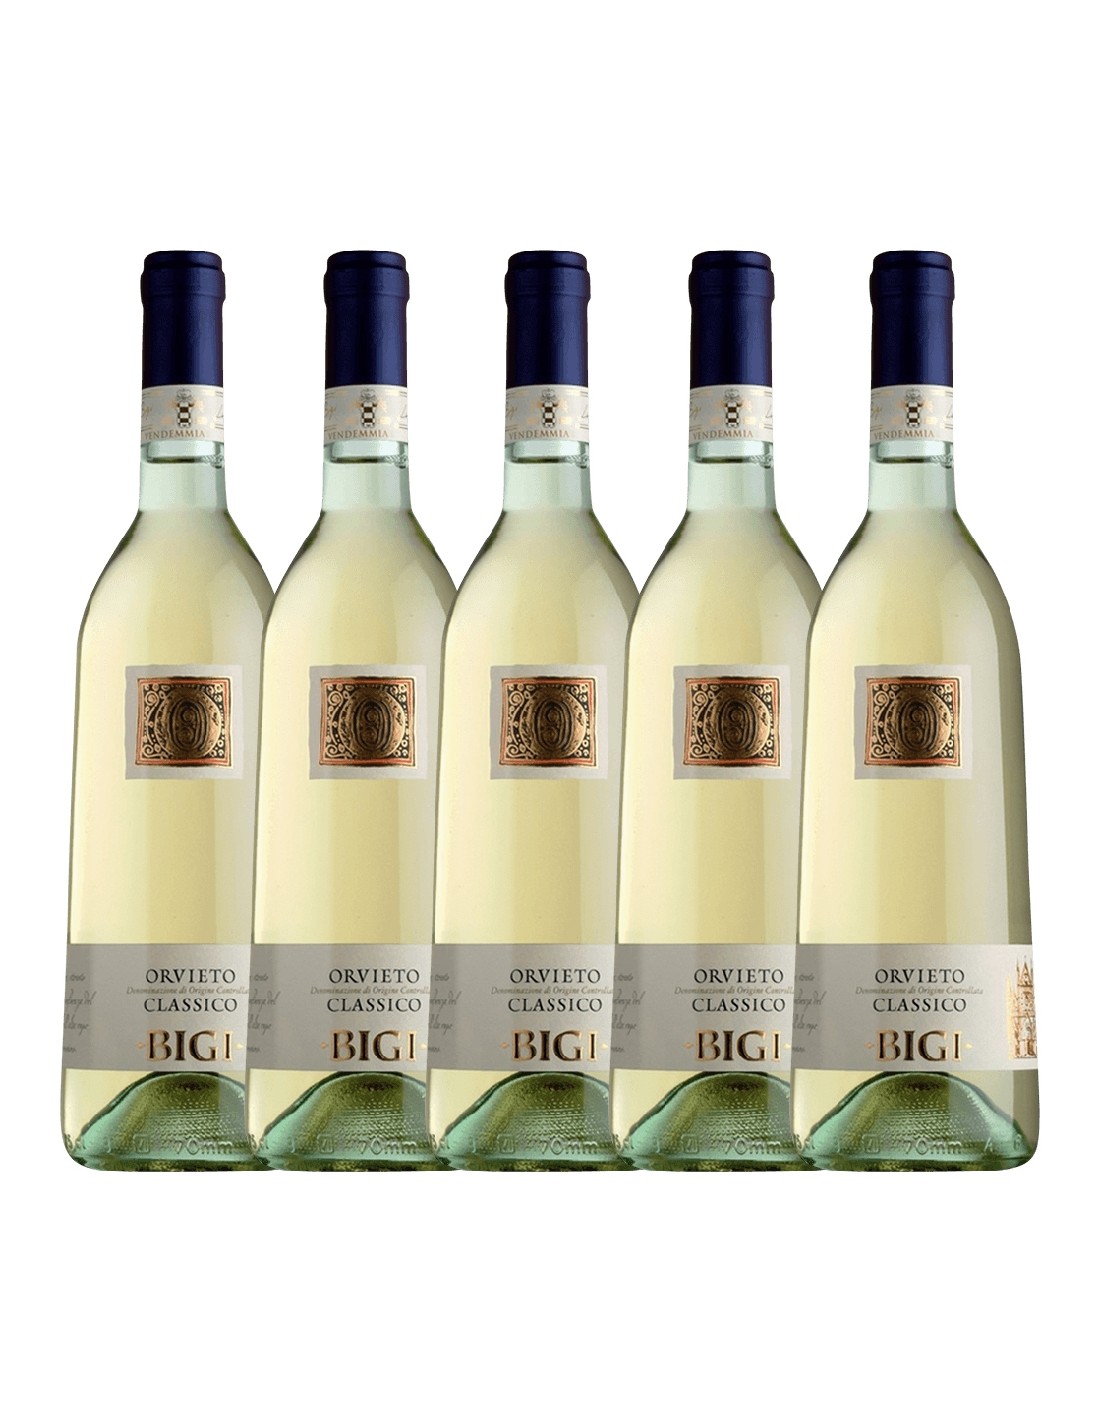 Pachet 5 sticle Vin alb, Bigi Orvieto, 0.75L, 12.5% alc., Italia alcooldiscount.ro